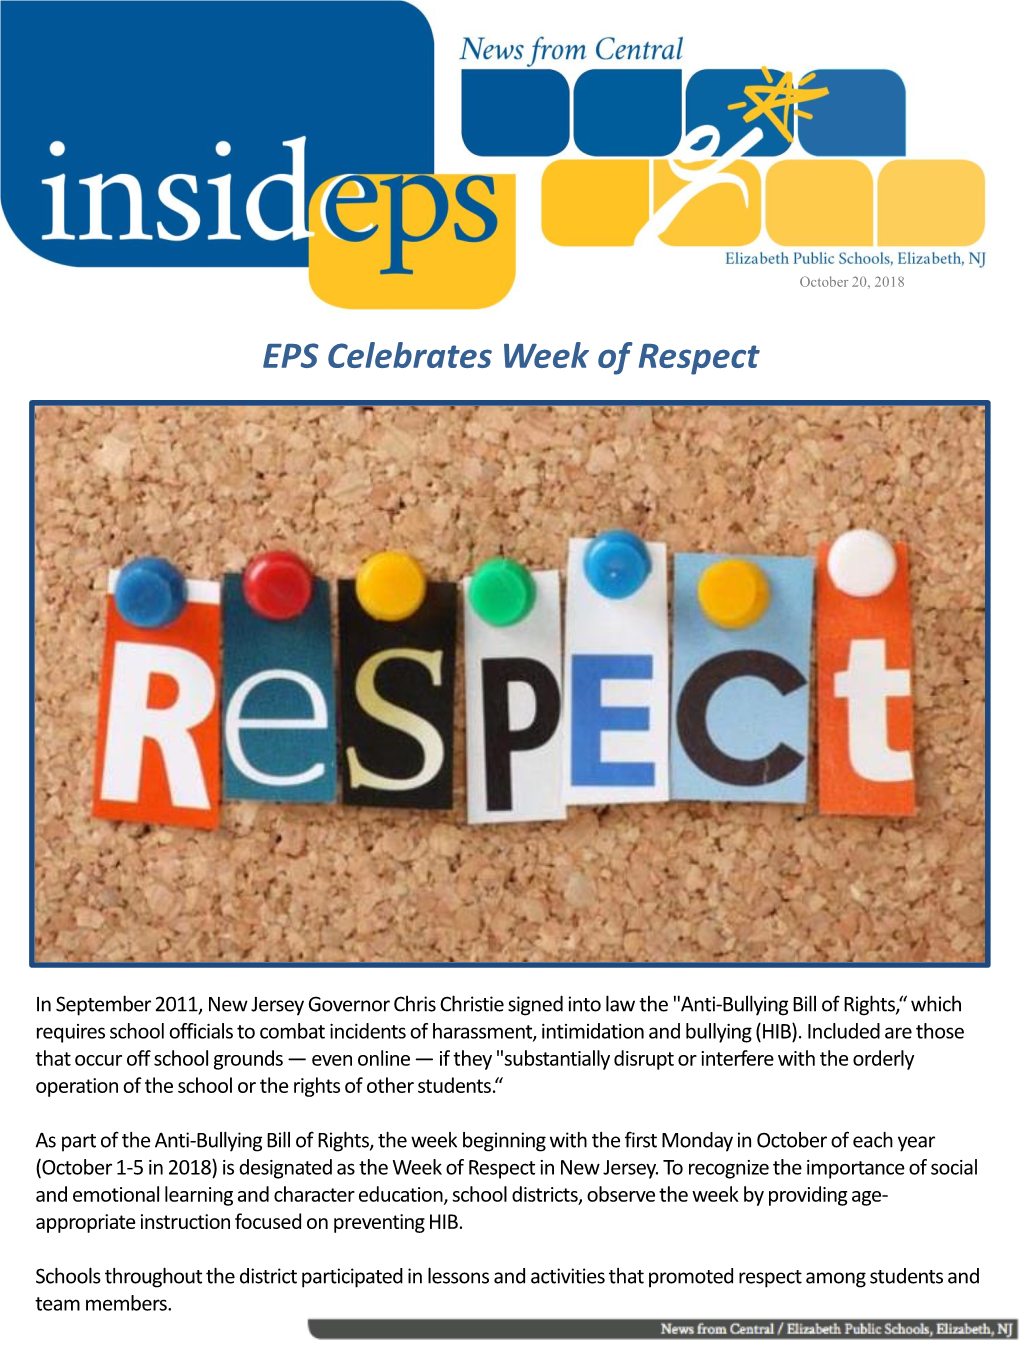 Inside EPS in the Newsletter Category